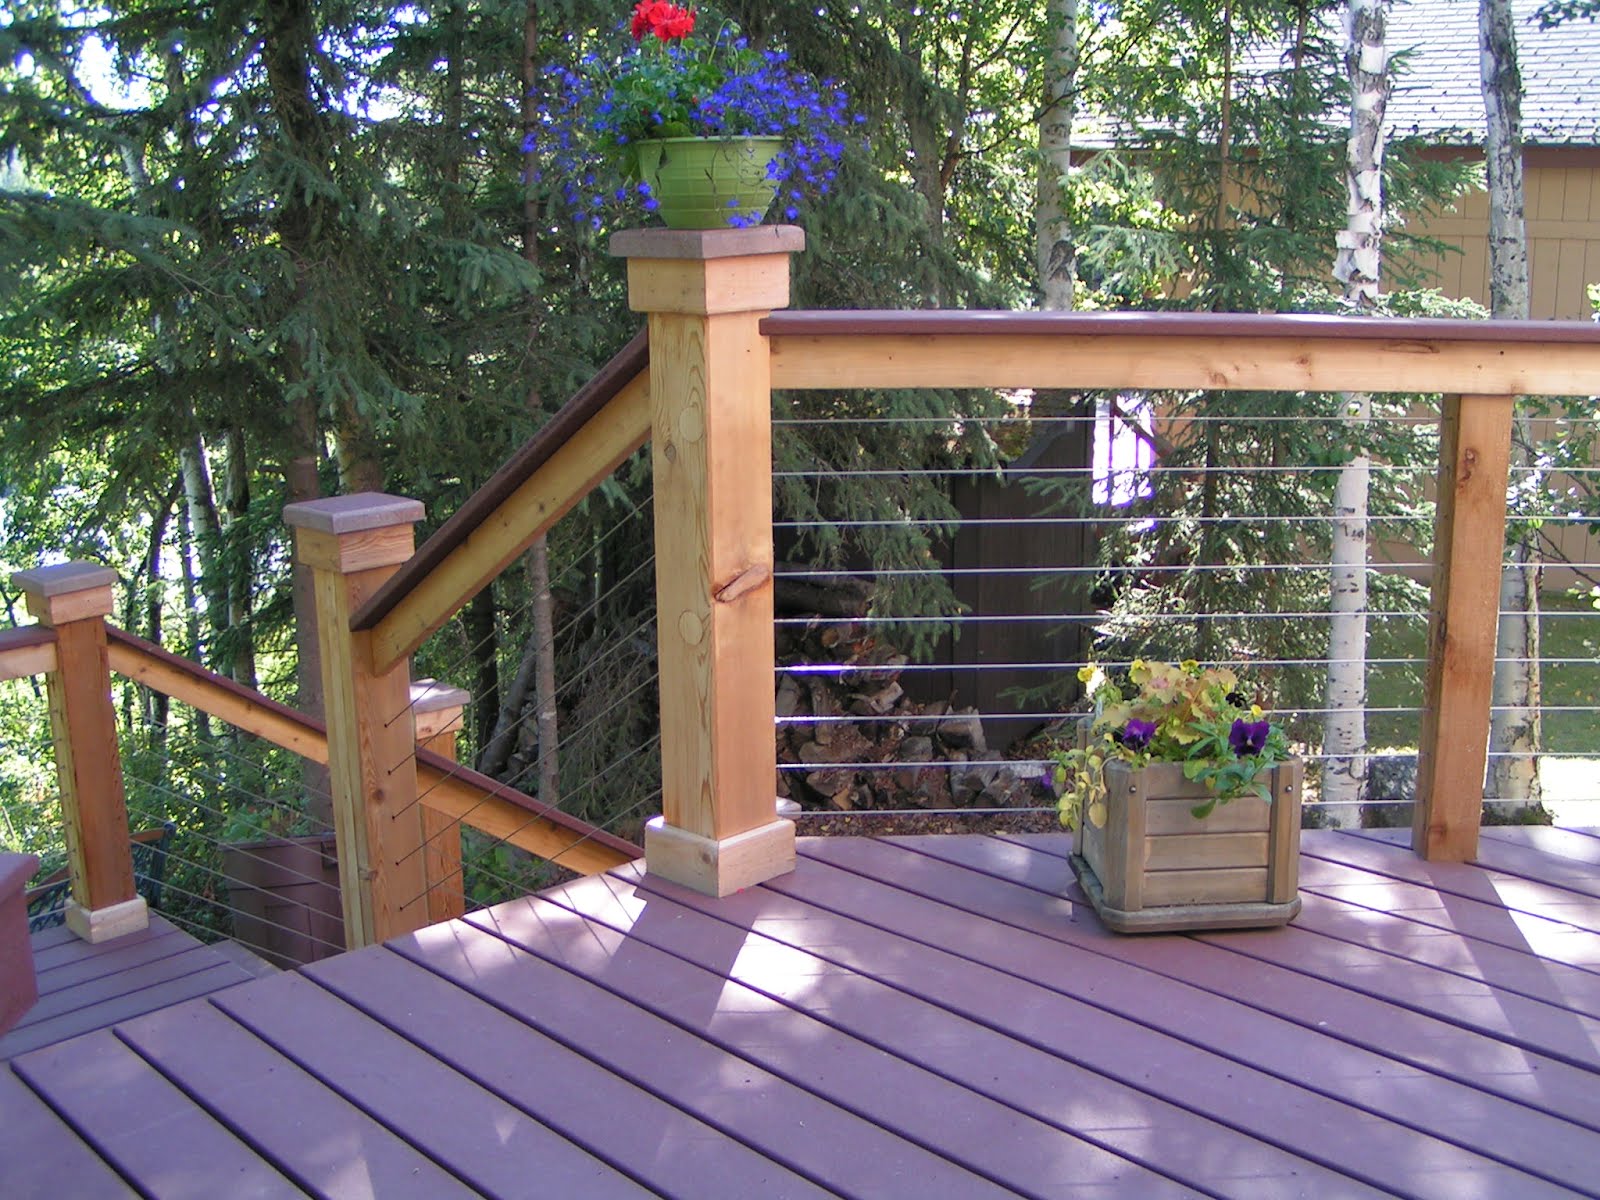 Landscape Design Ideas: Outdoor Deck Decor For Summer